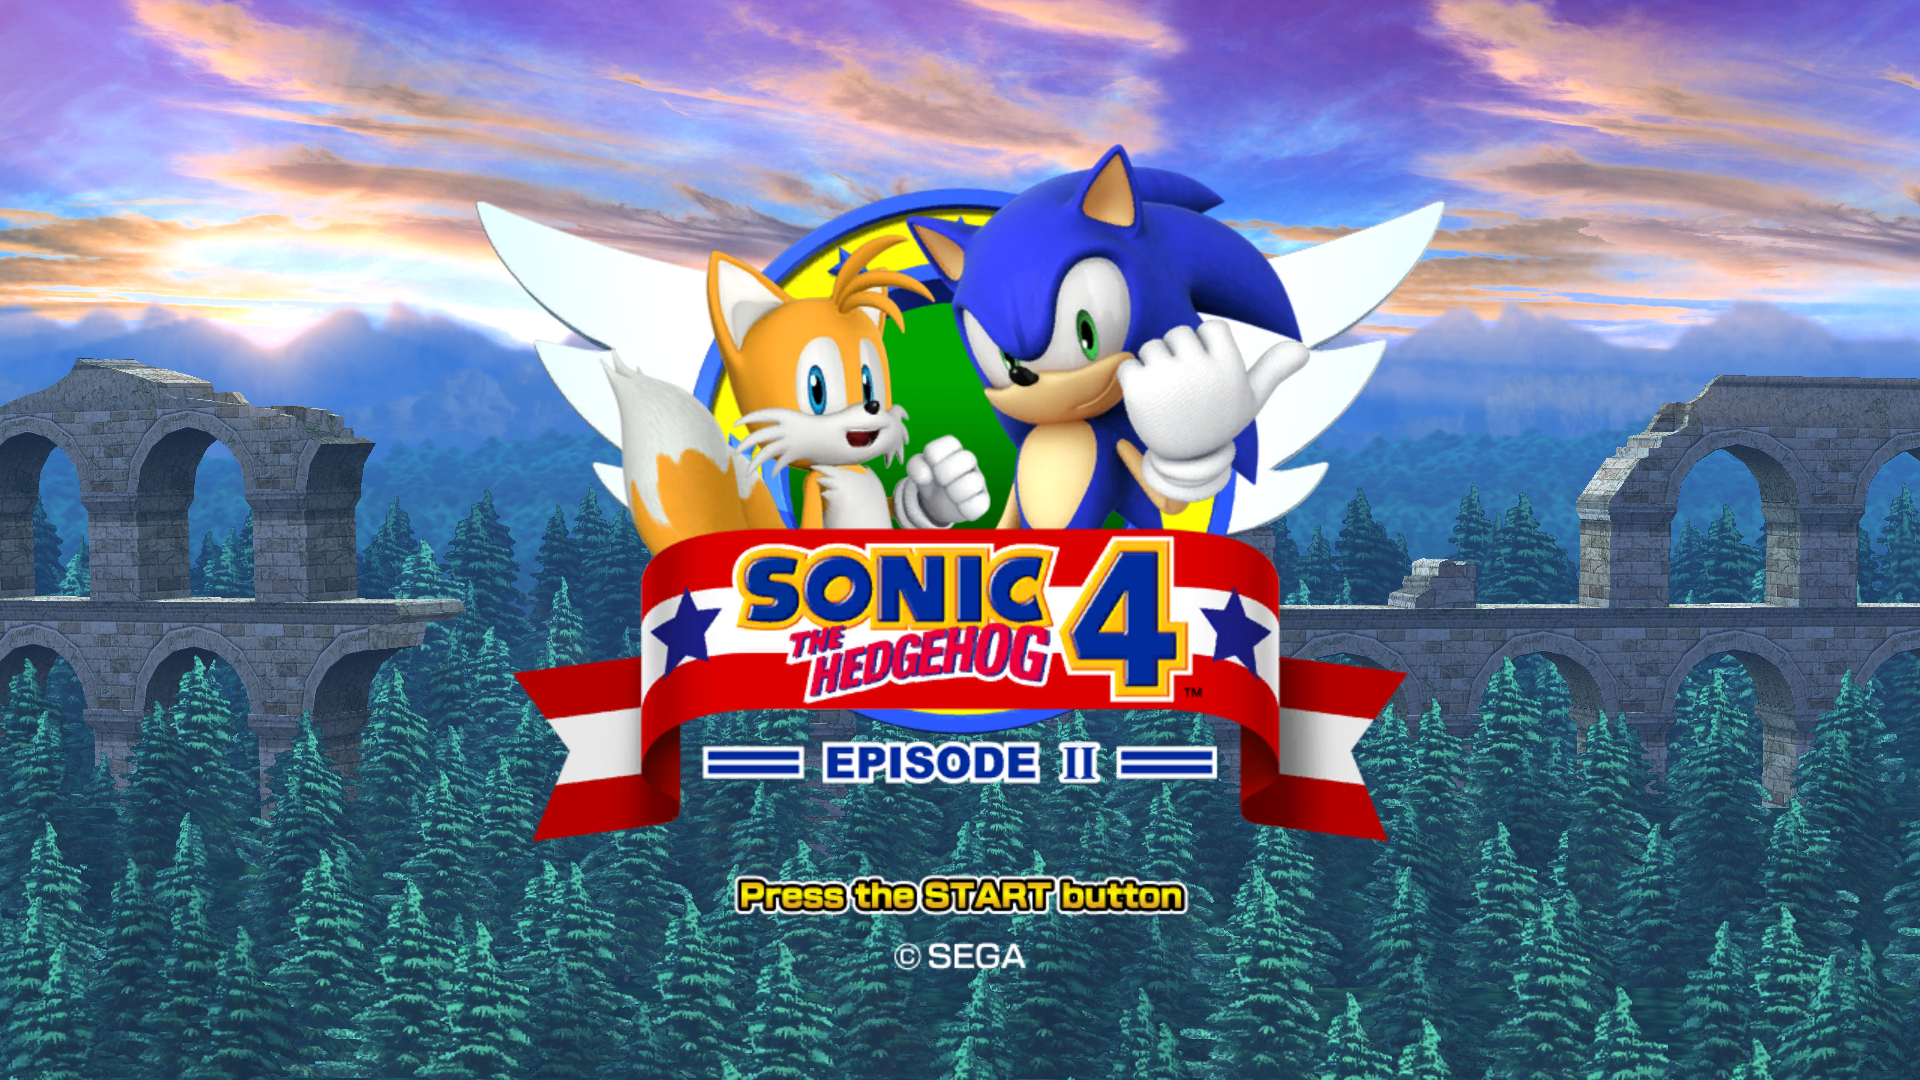 magie vreugde datum Sonic the Hedgehog 4 Episode II